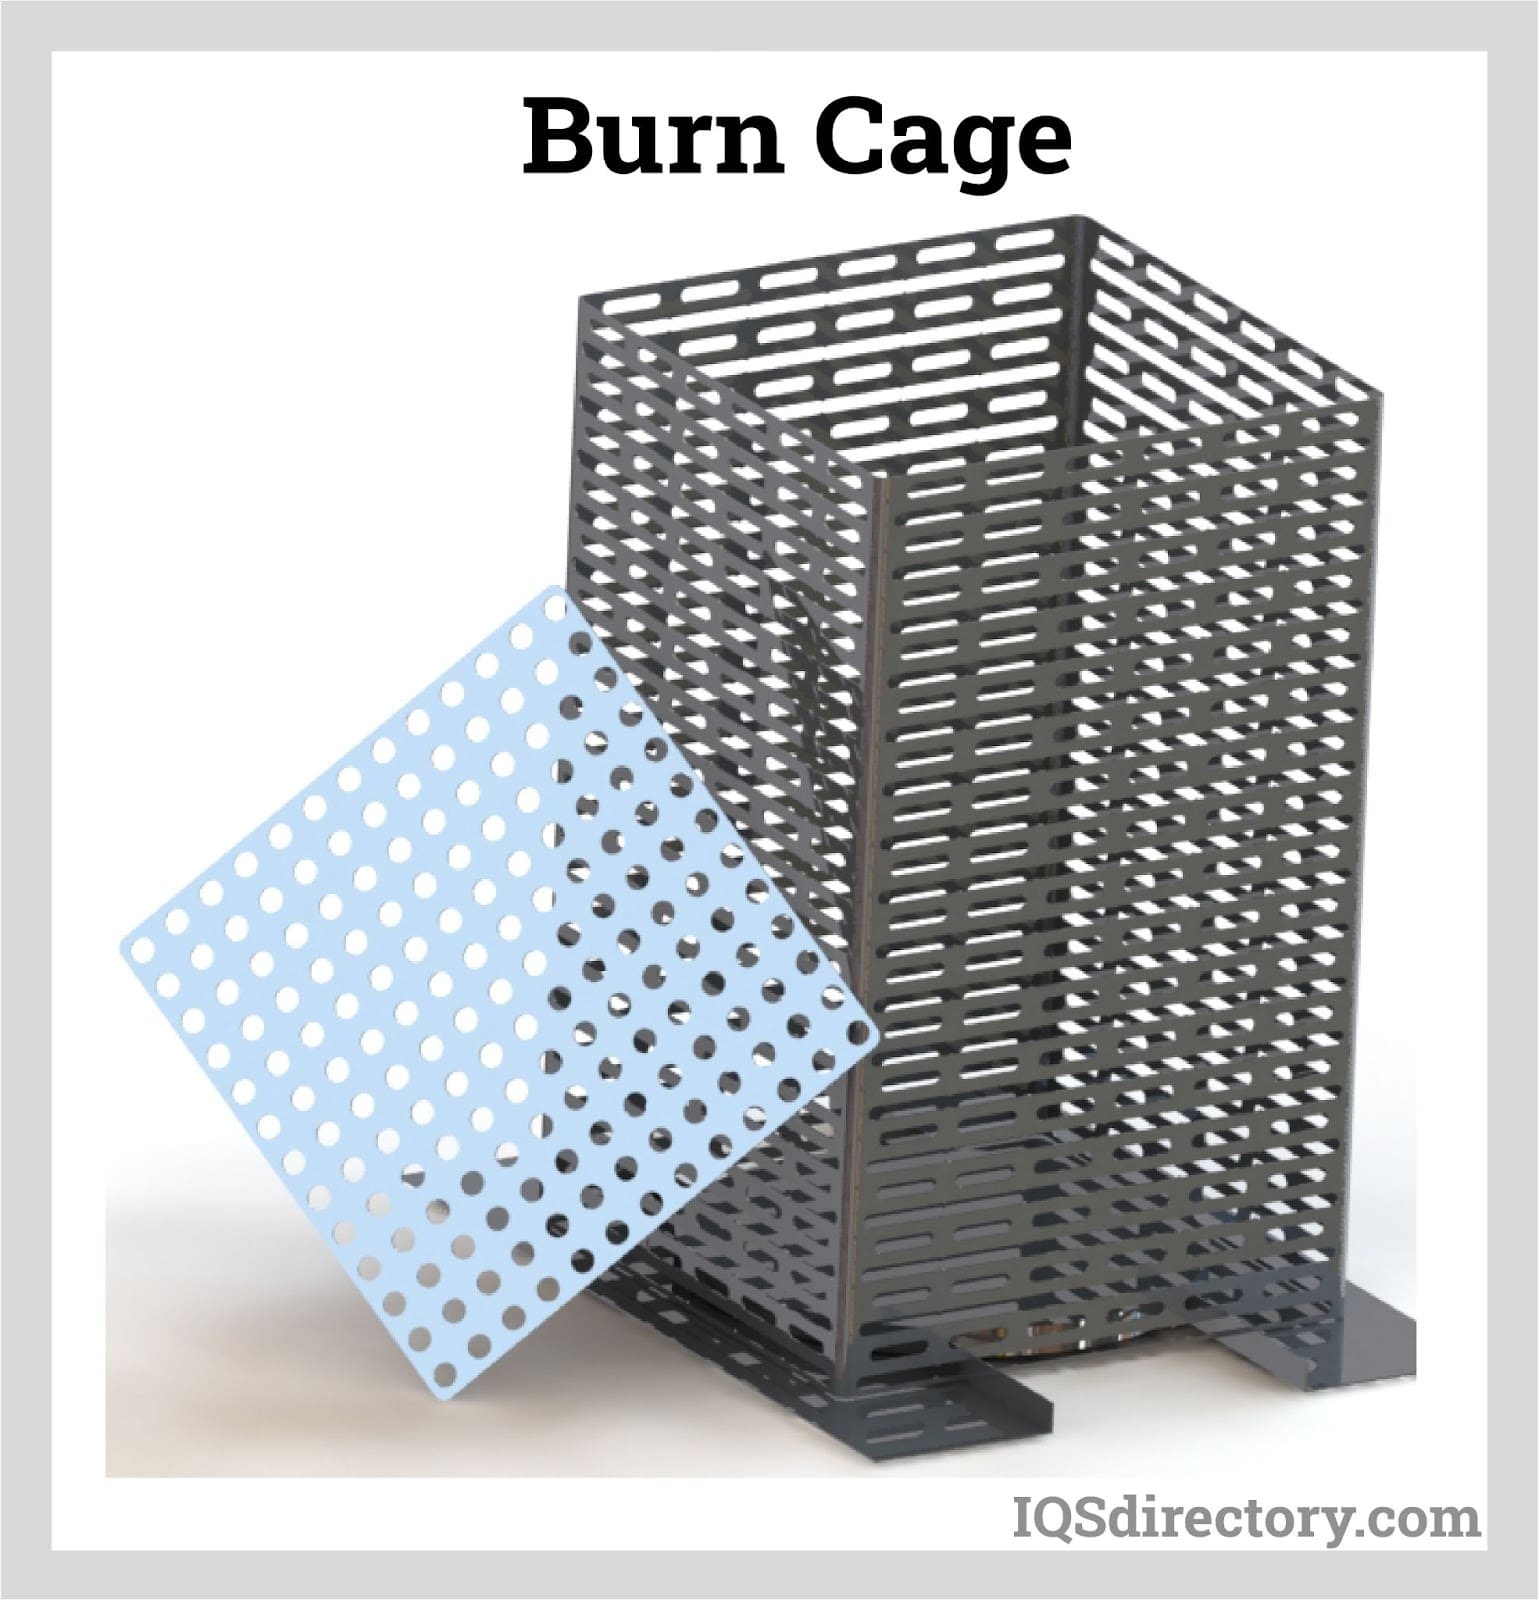 Burn Cage